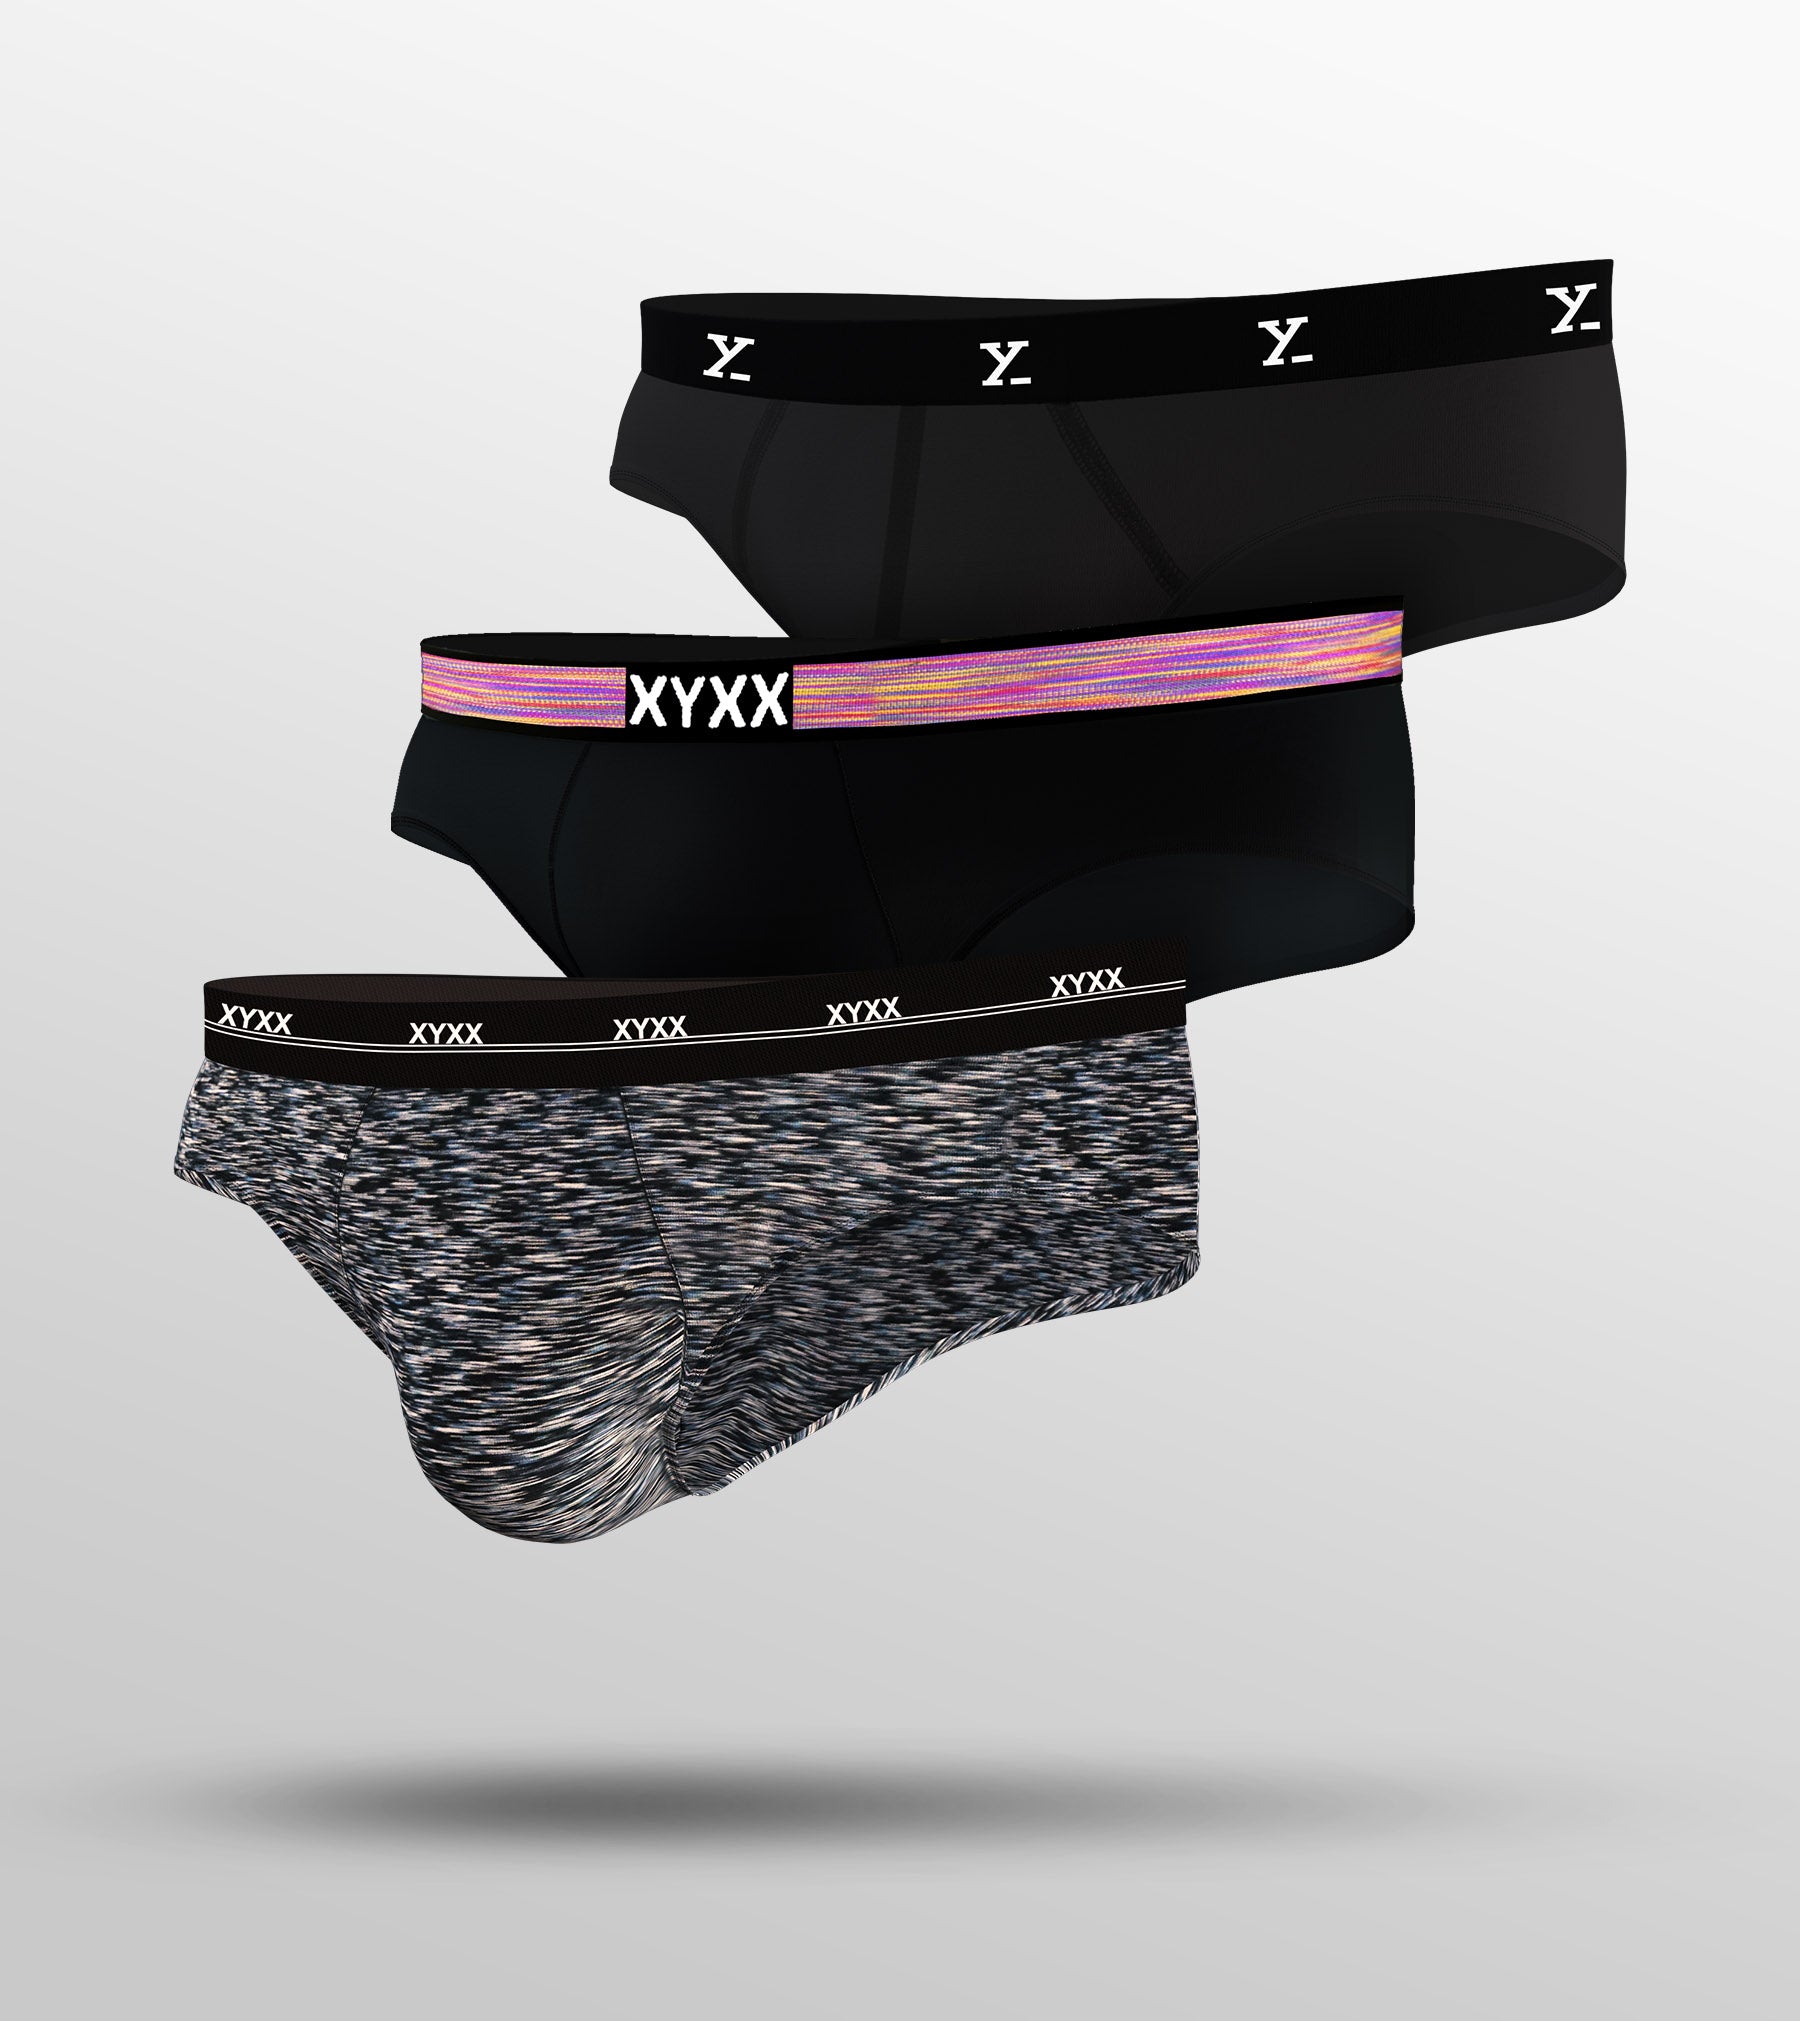 Tencel Modal Briefs For Men Pack of 3 (All Black) -  XYXX Mens Apparels